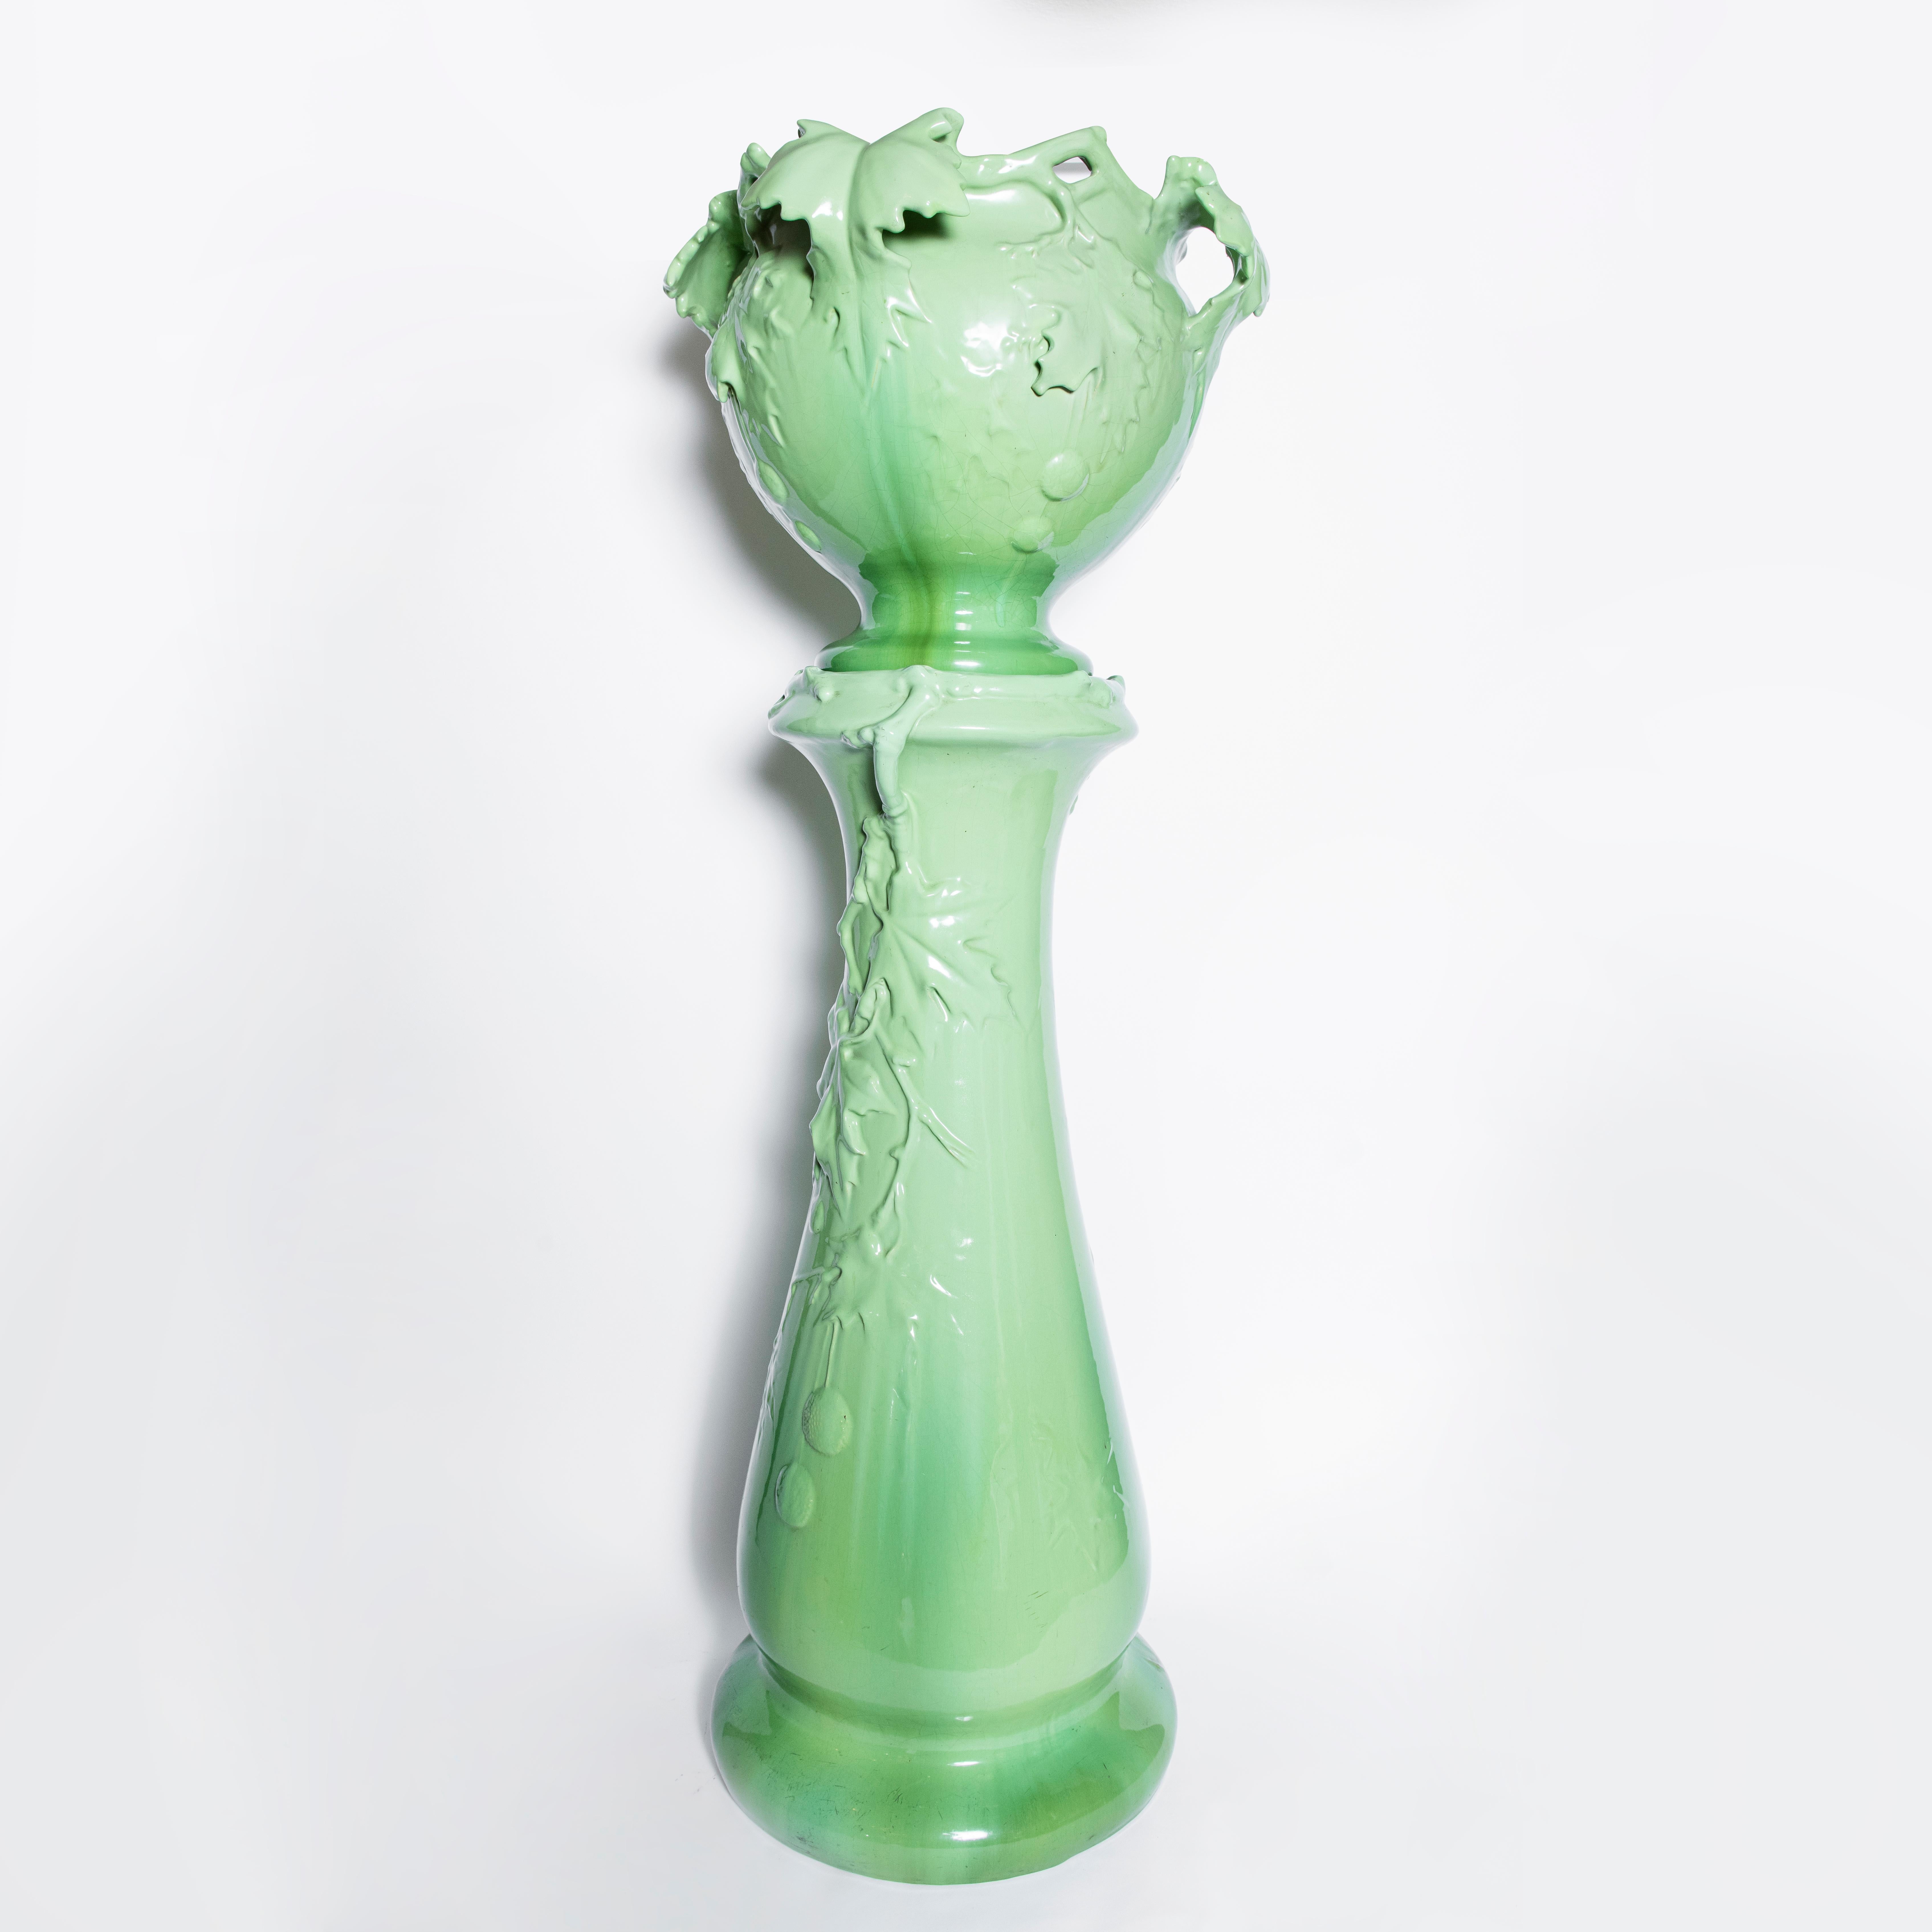 Enamel ceramic planter. Art Nouveau period, France, early 20th century.
Attributed to Delphin Massier.

Planter dimensions: 48 cm diameter, 38 cm height.
Base dimensions: 39 cm diameter, 90 cm height.